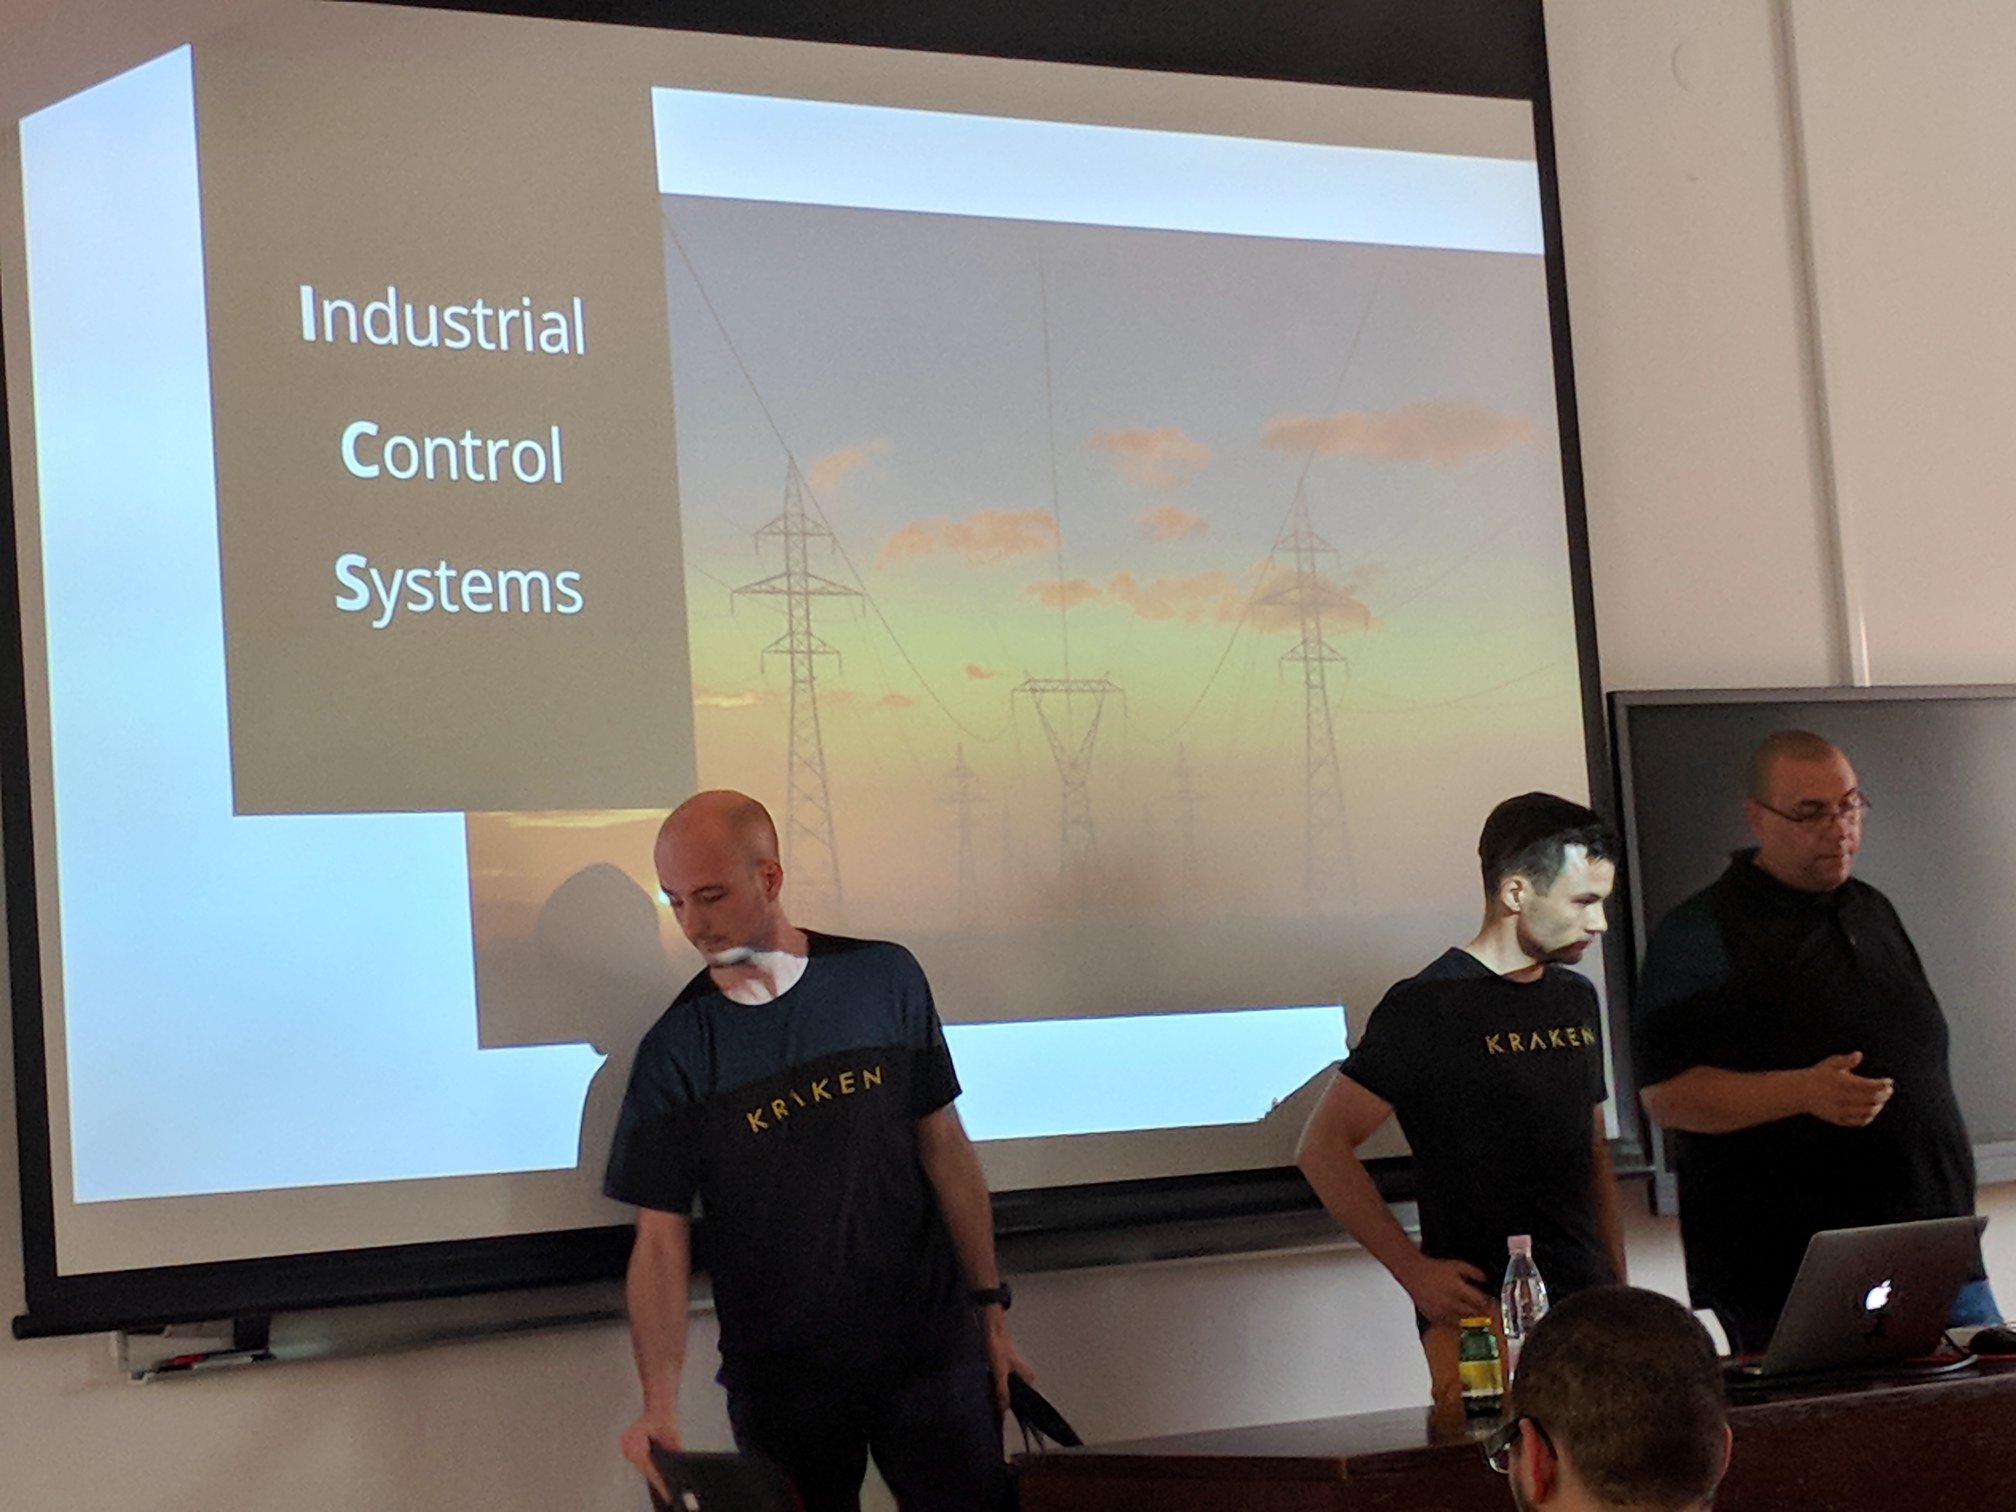 Industrial Control Systems presentation